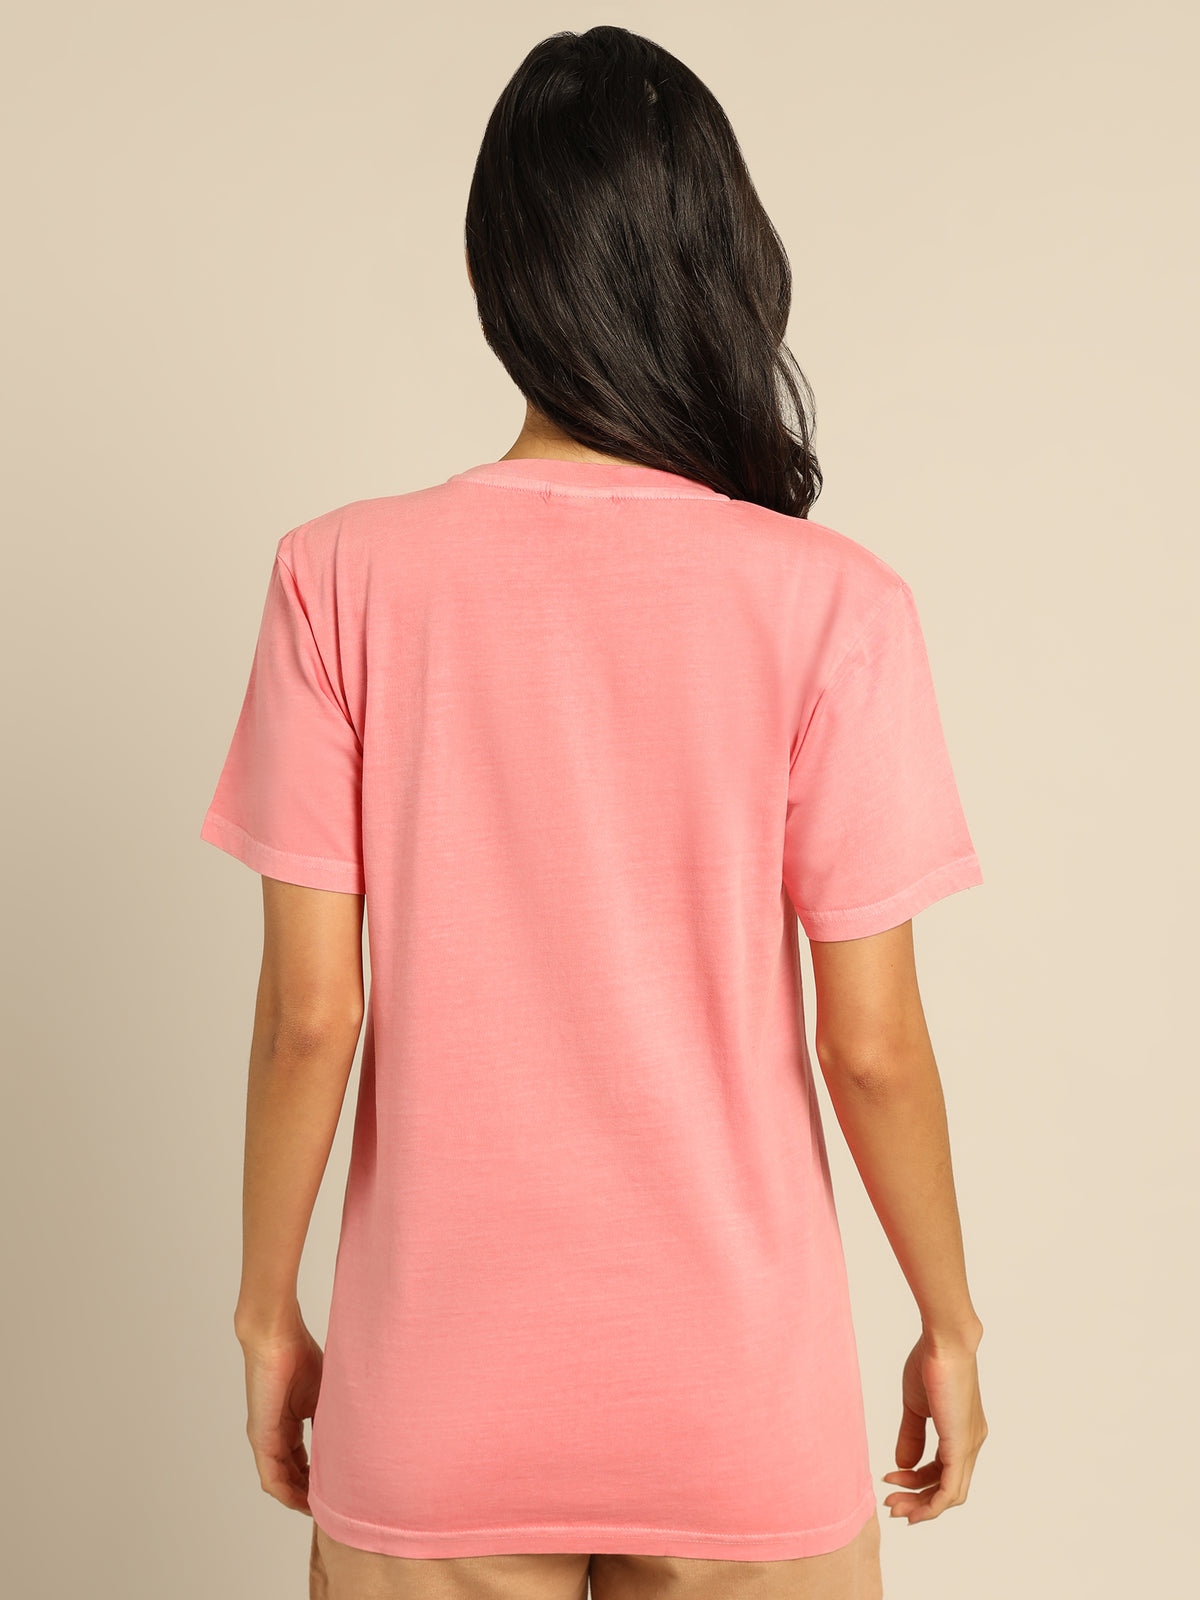 Annatto T-Shirt in Pink